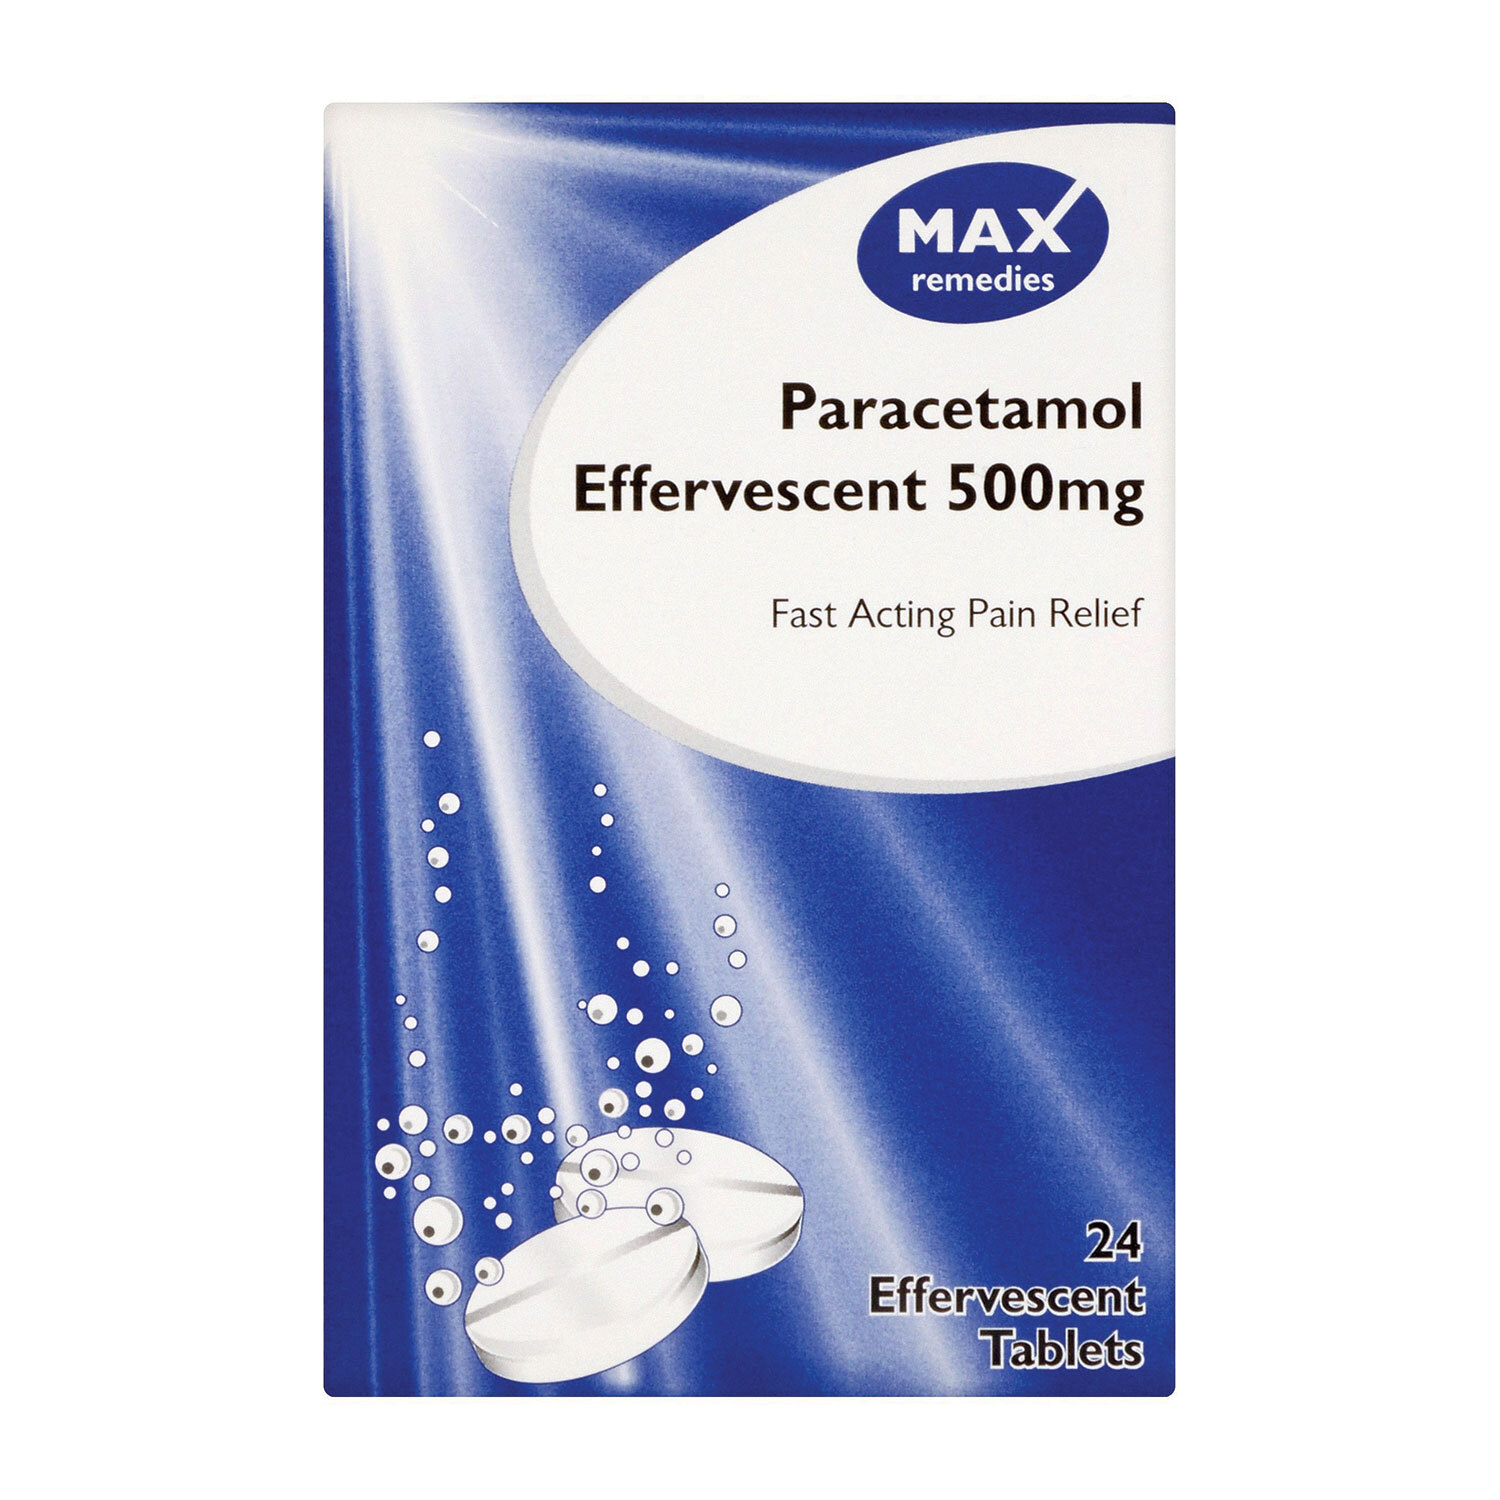 Max Remedies Paracetamol Effervescent Tablets Image